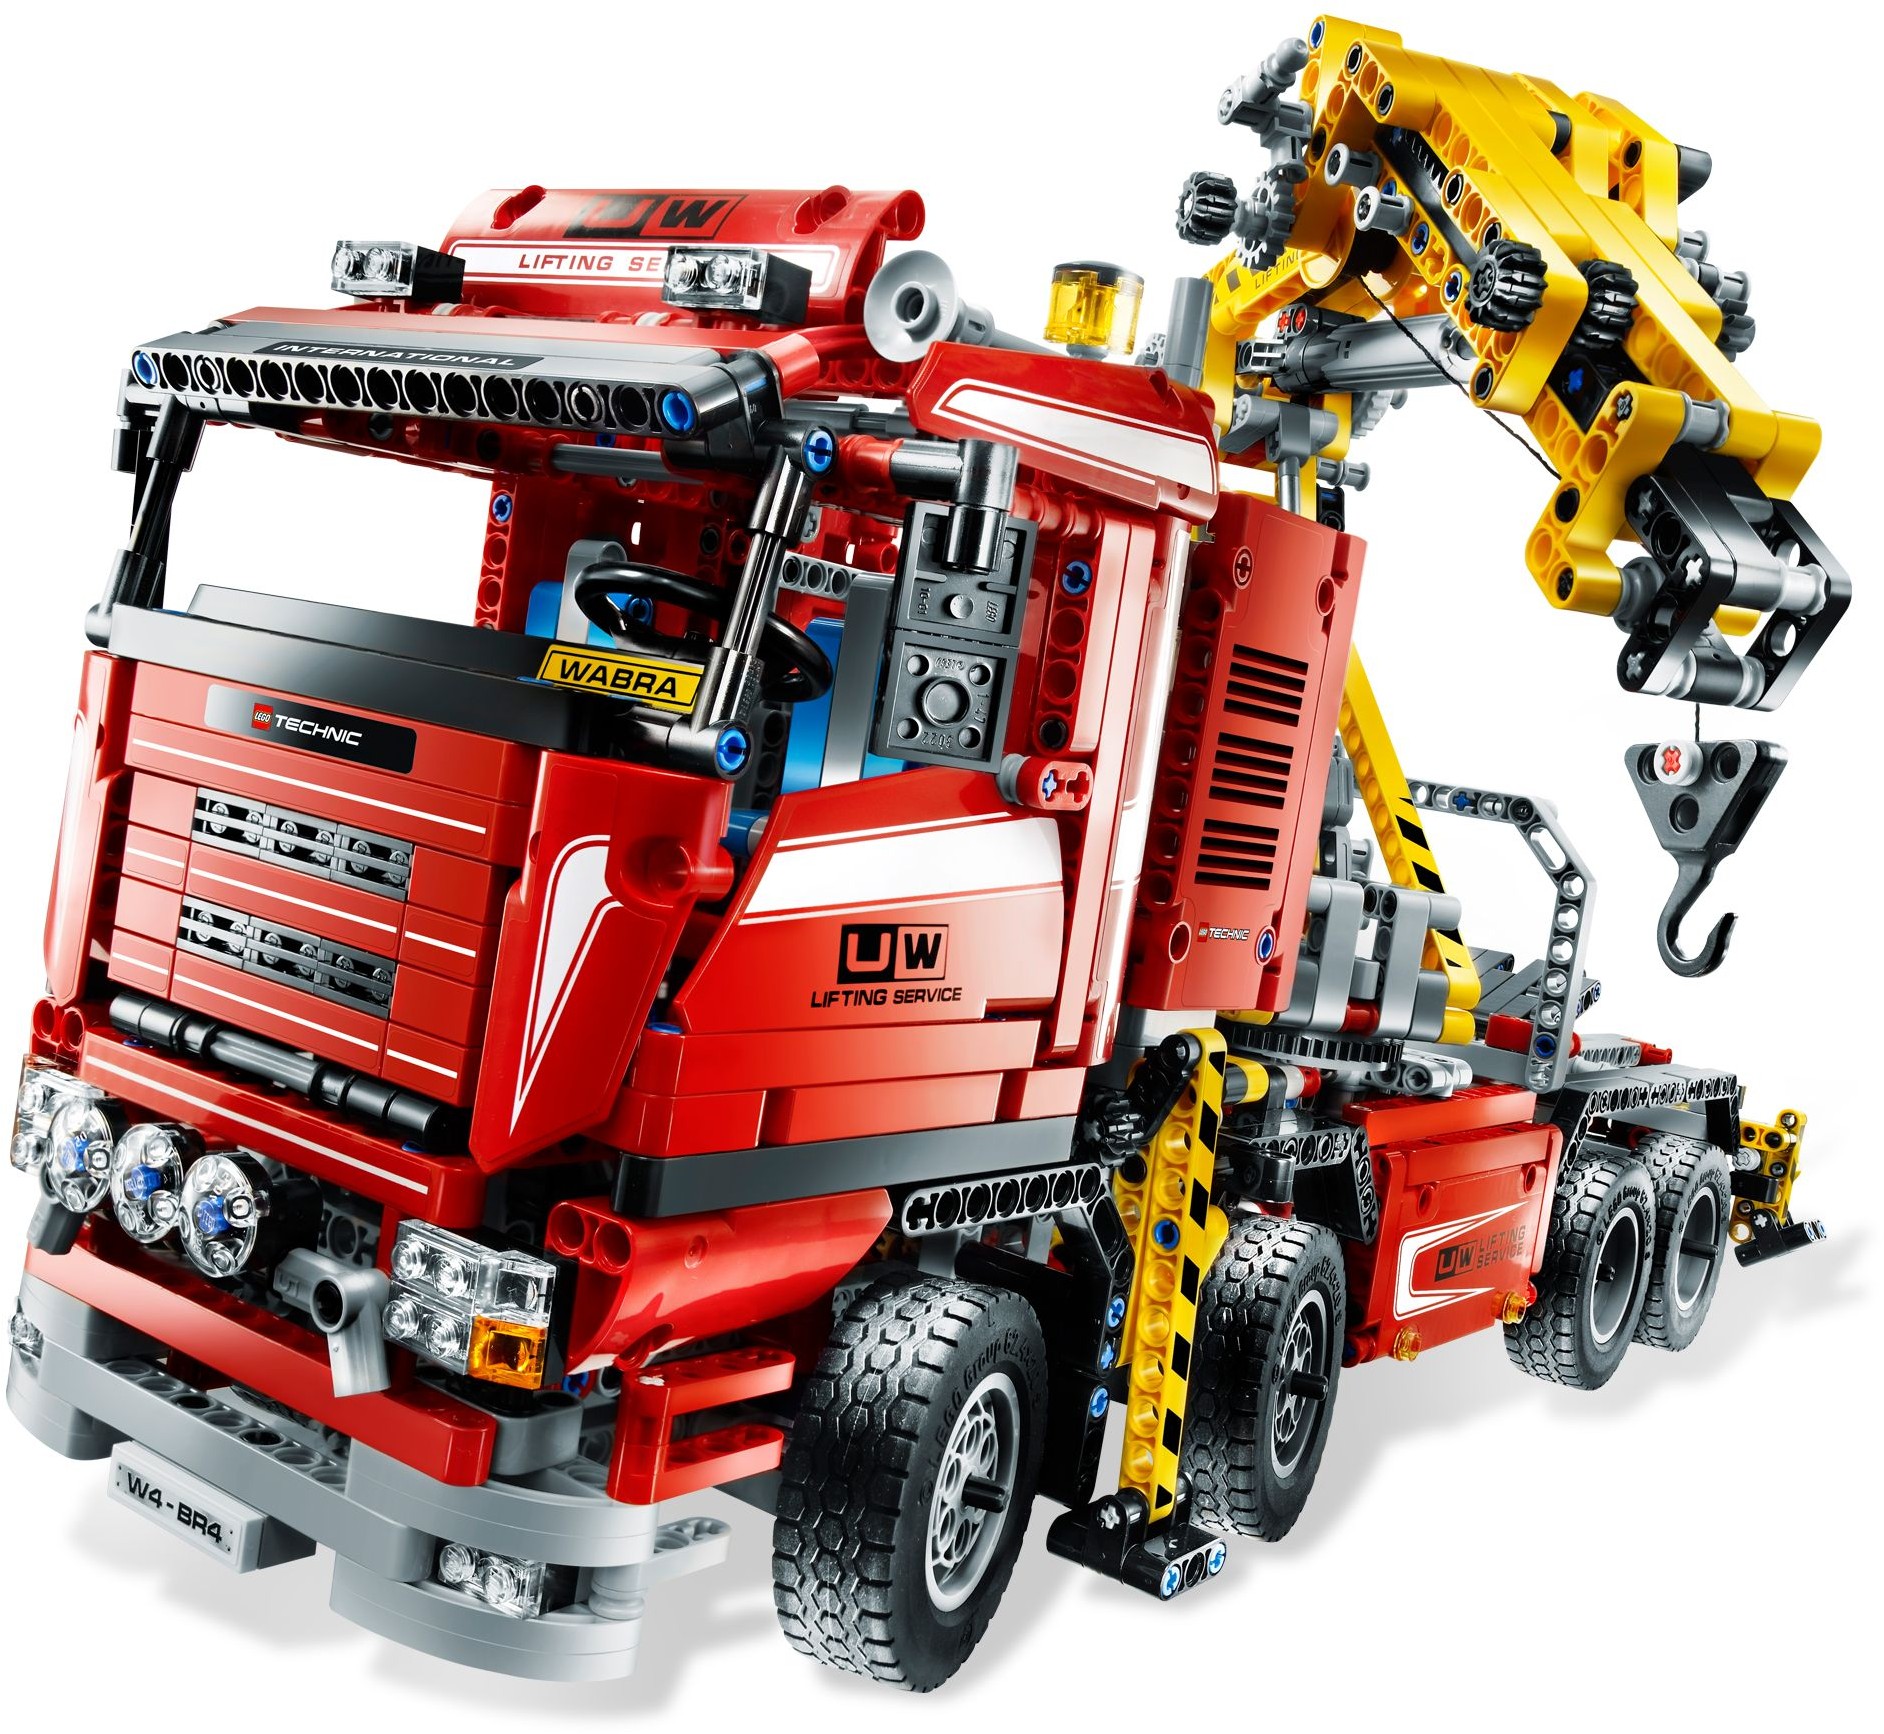 Technic | 2009 | Brickset: LEGO set 